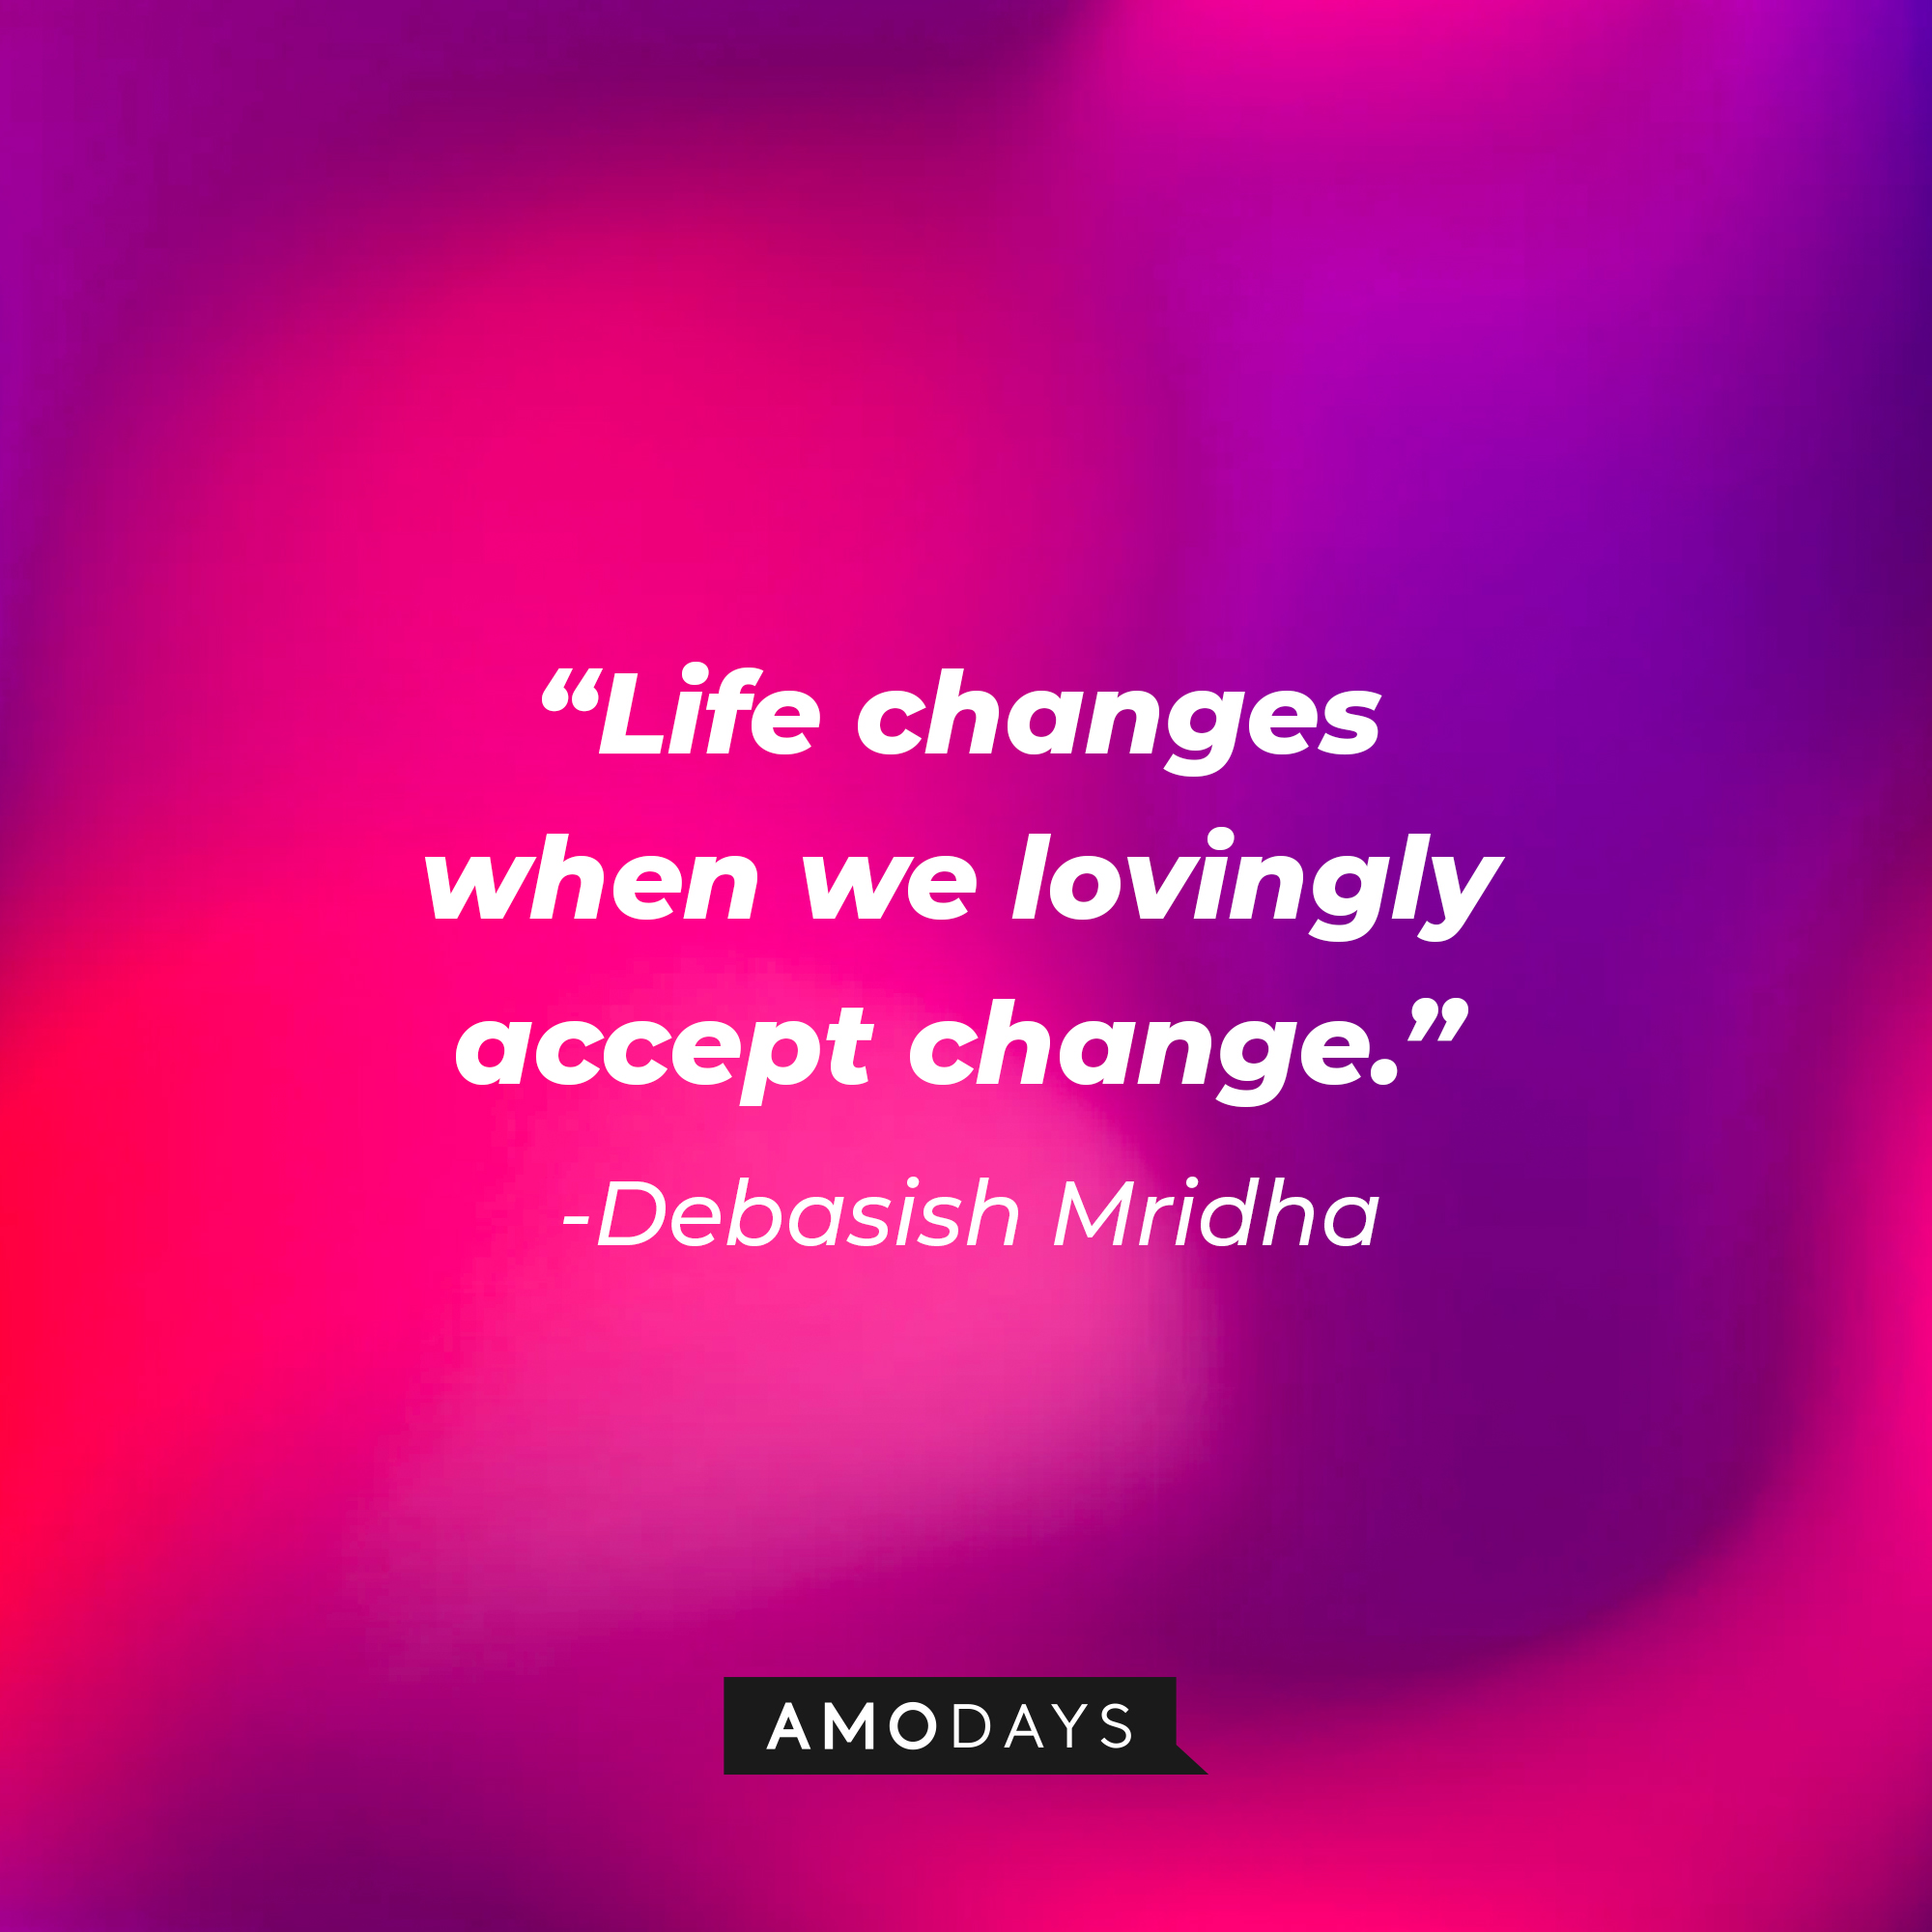 Debasish Mridha’s quote: "Life changes when we lovingly accept change."  | Image: Amodays